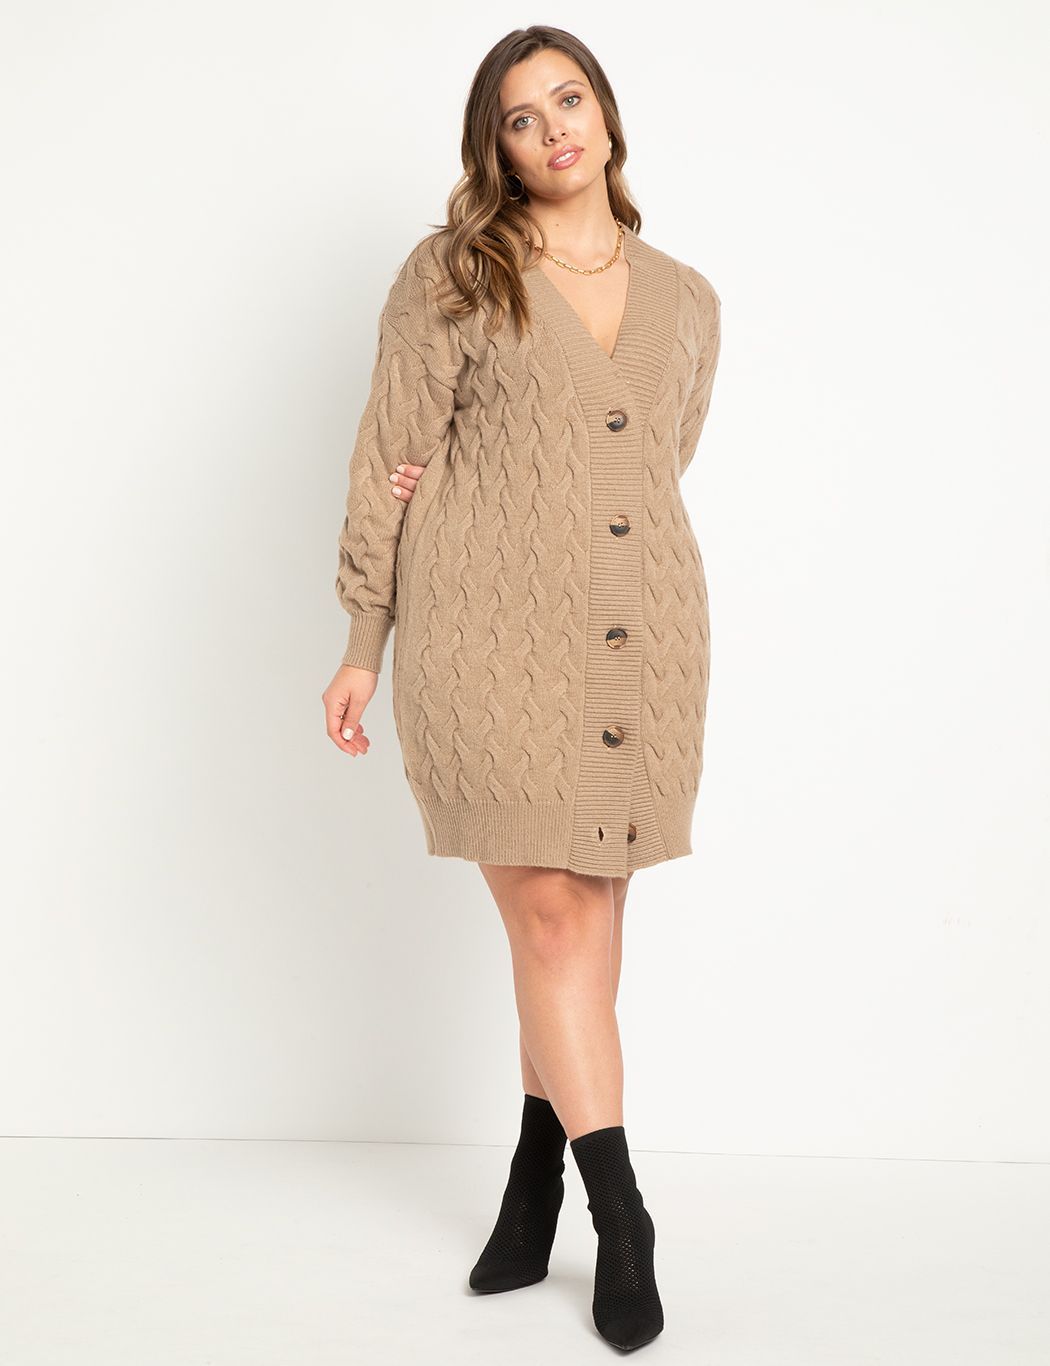 Novelty Stretch Cardigan Sweater Dress | Women's Plus Size Dresses | ELOQUII | Eloquii